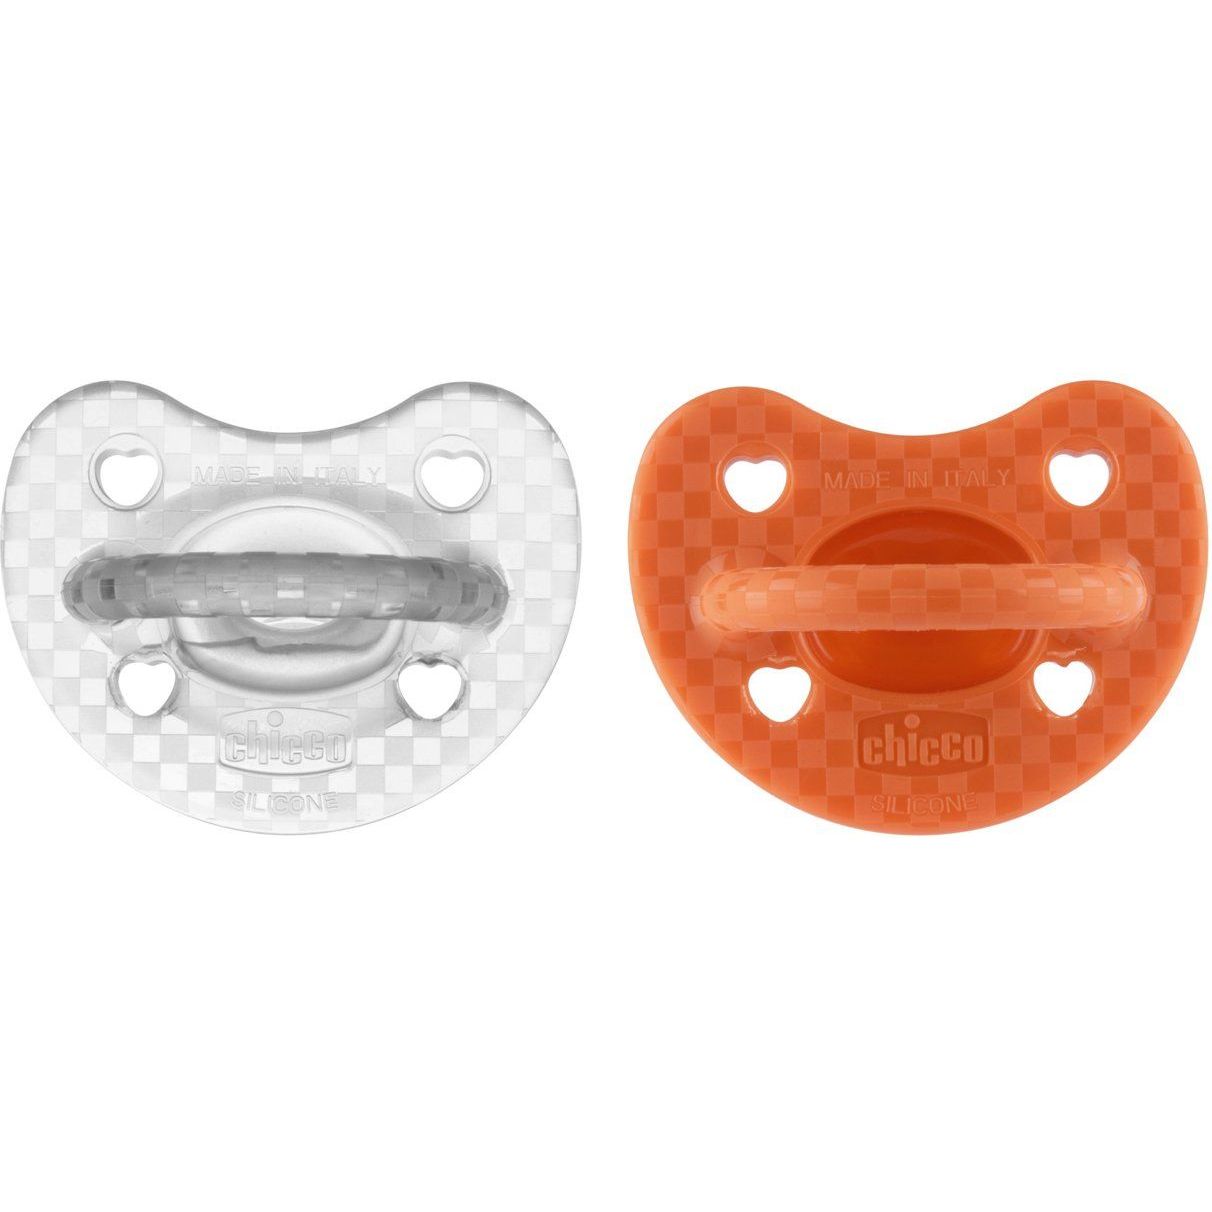 Пустышка Chicco PhysioForma Luxe силикон 16-36 мес. 2 шт. оранжевая и прозрачная (73035.31) - фото 1